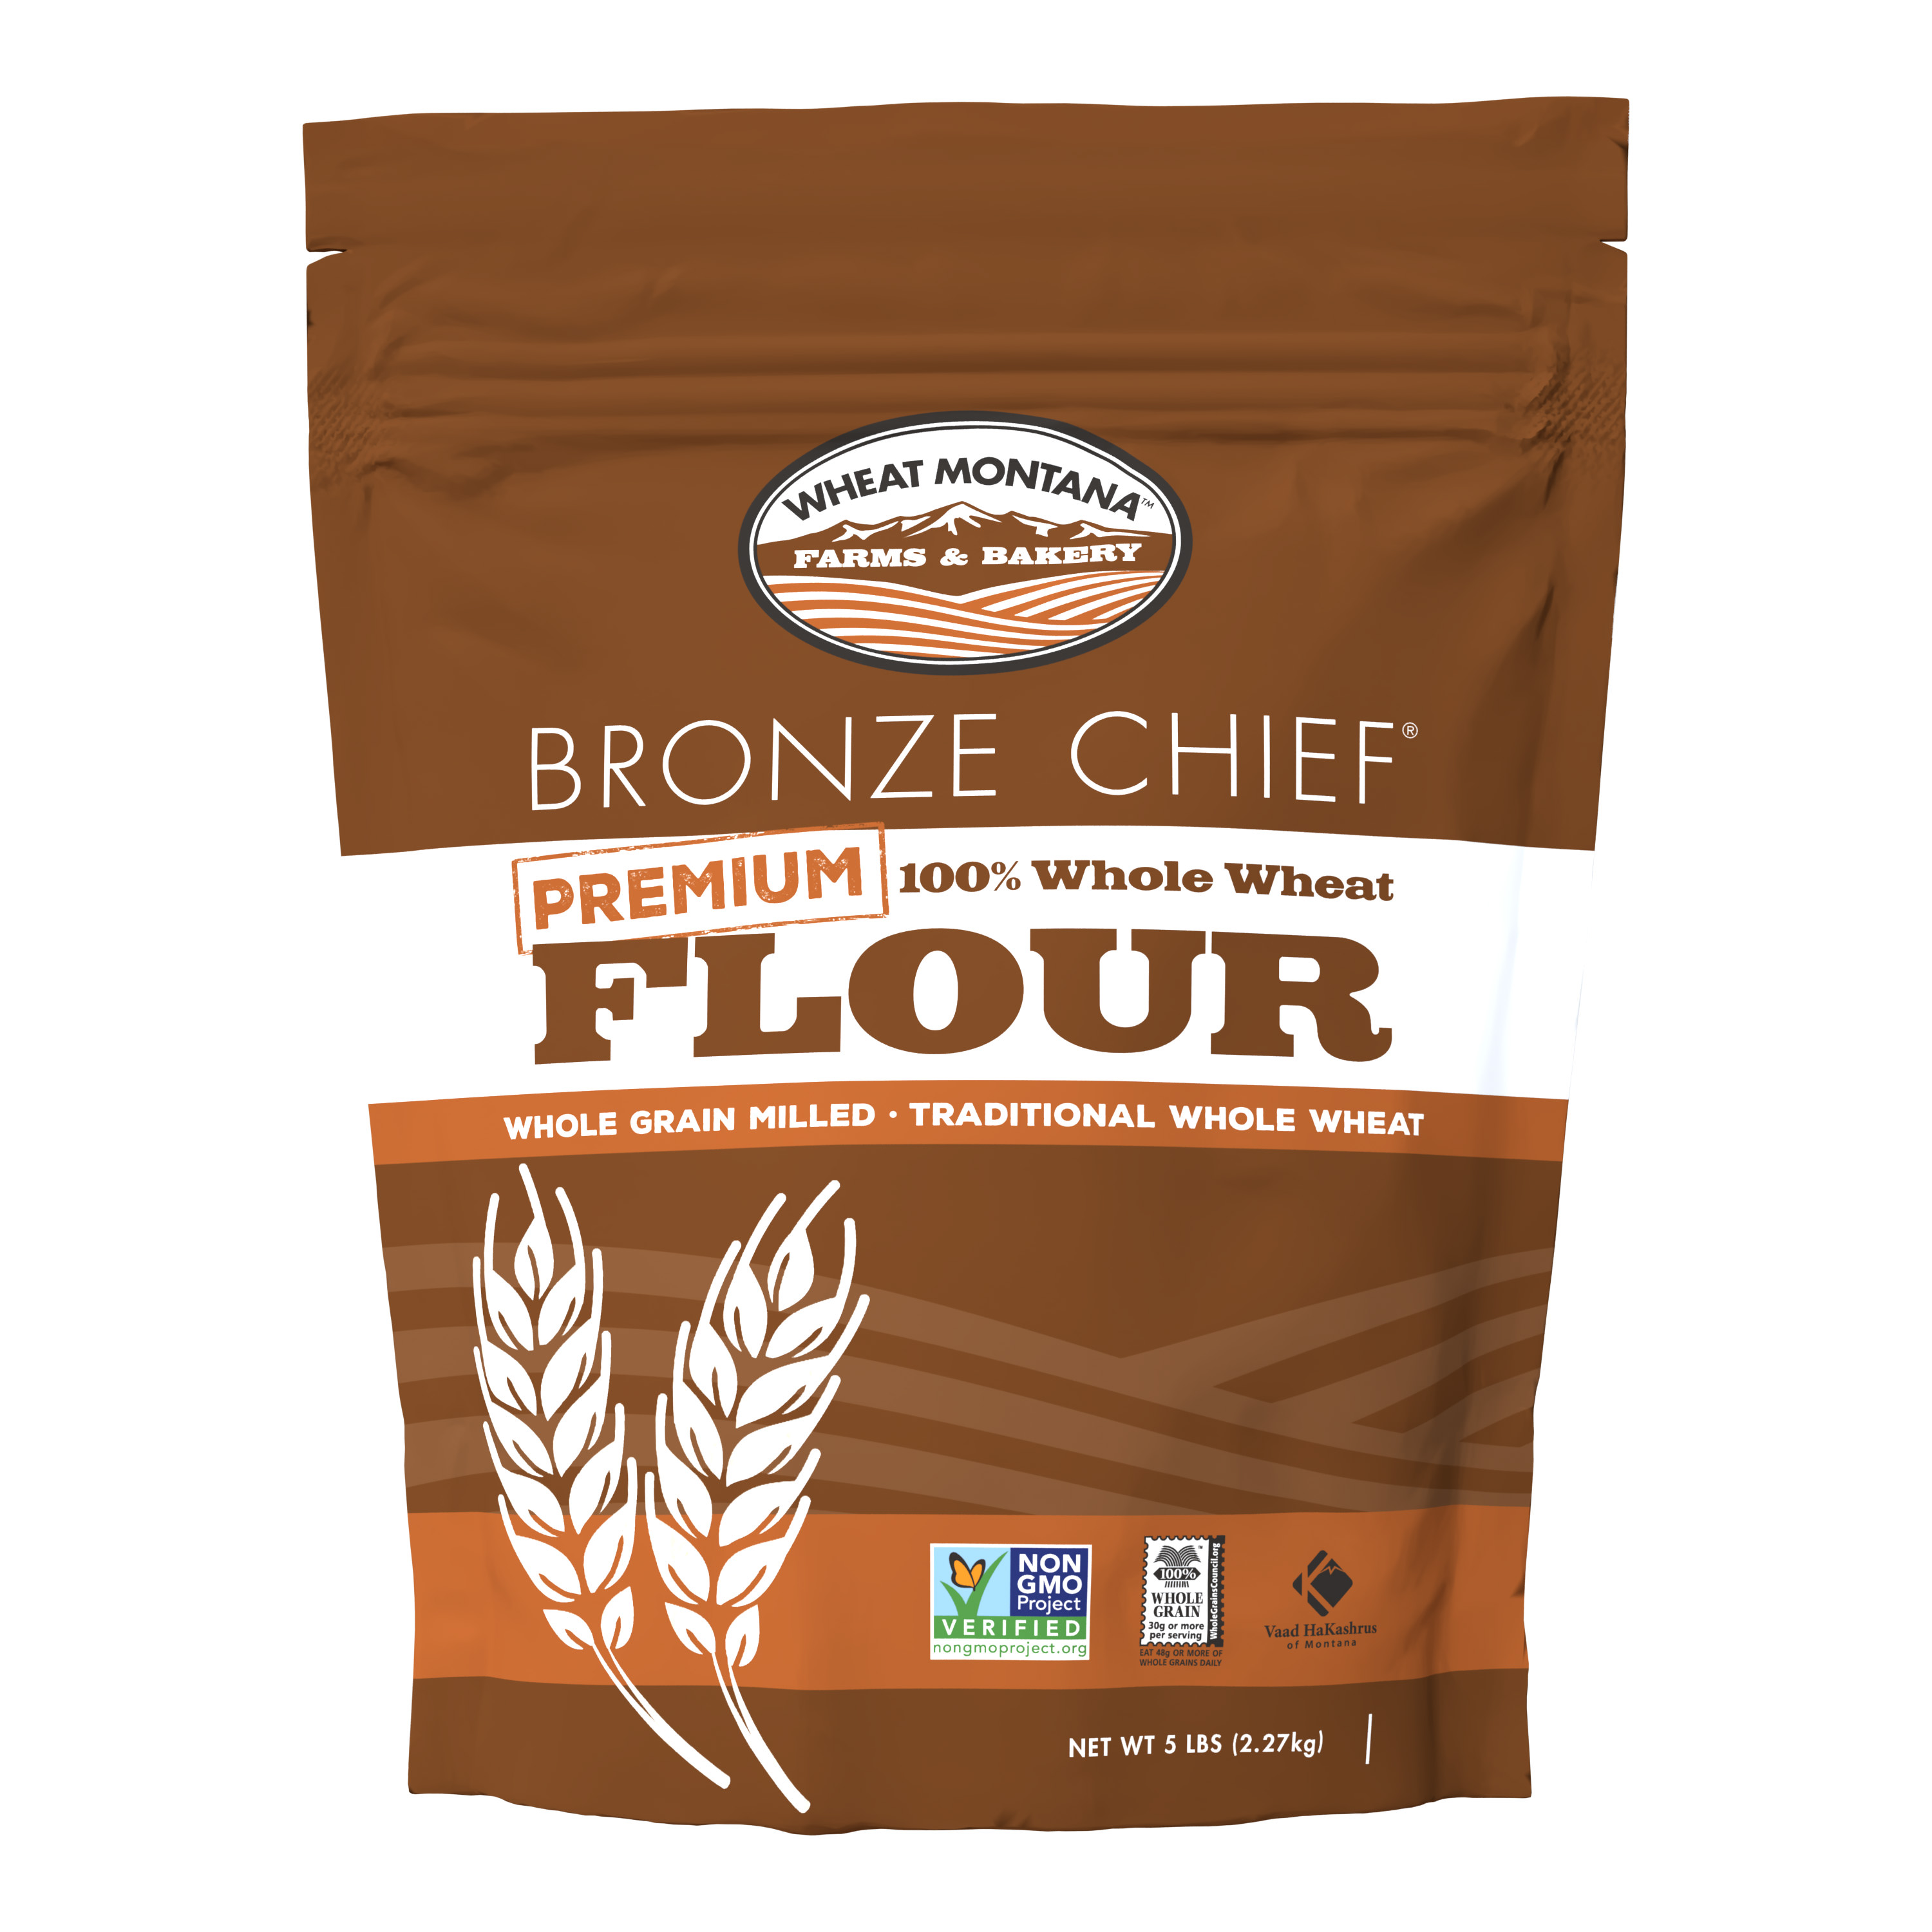 Wheat Montana Bronze Chief 100% Whole Wheat Flour, 80 oz - image 1 of 8